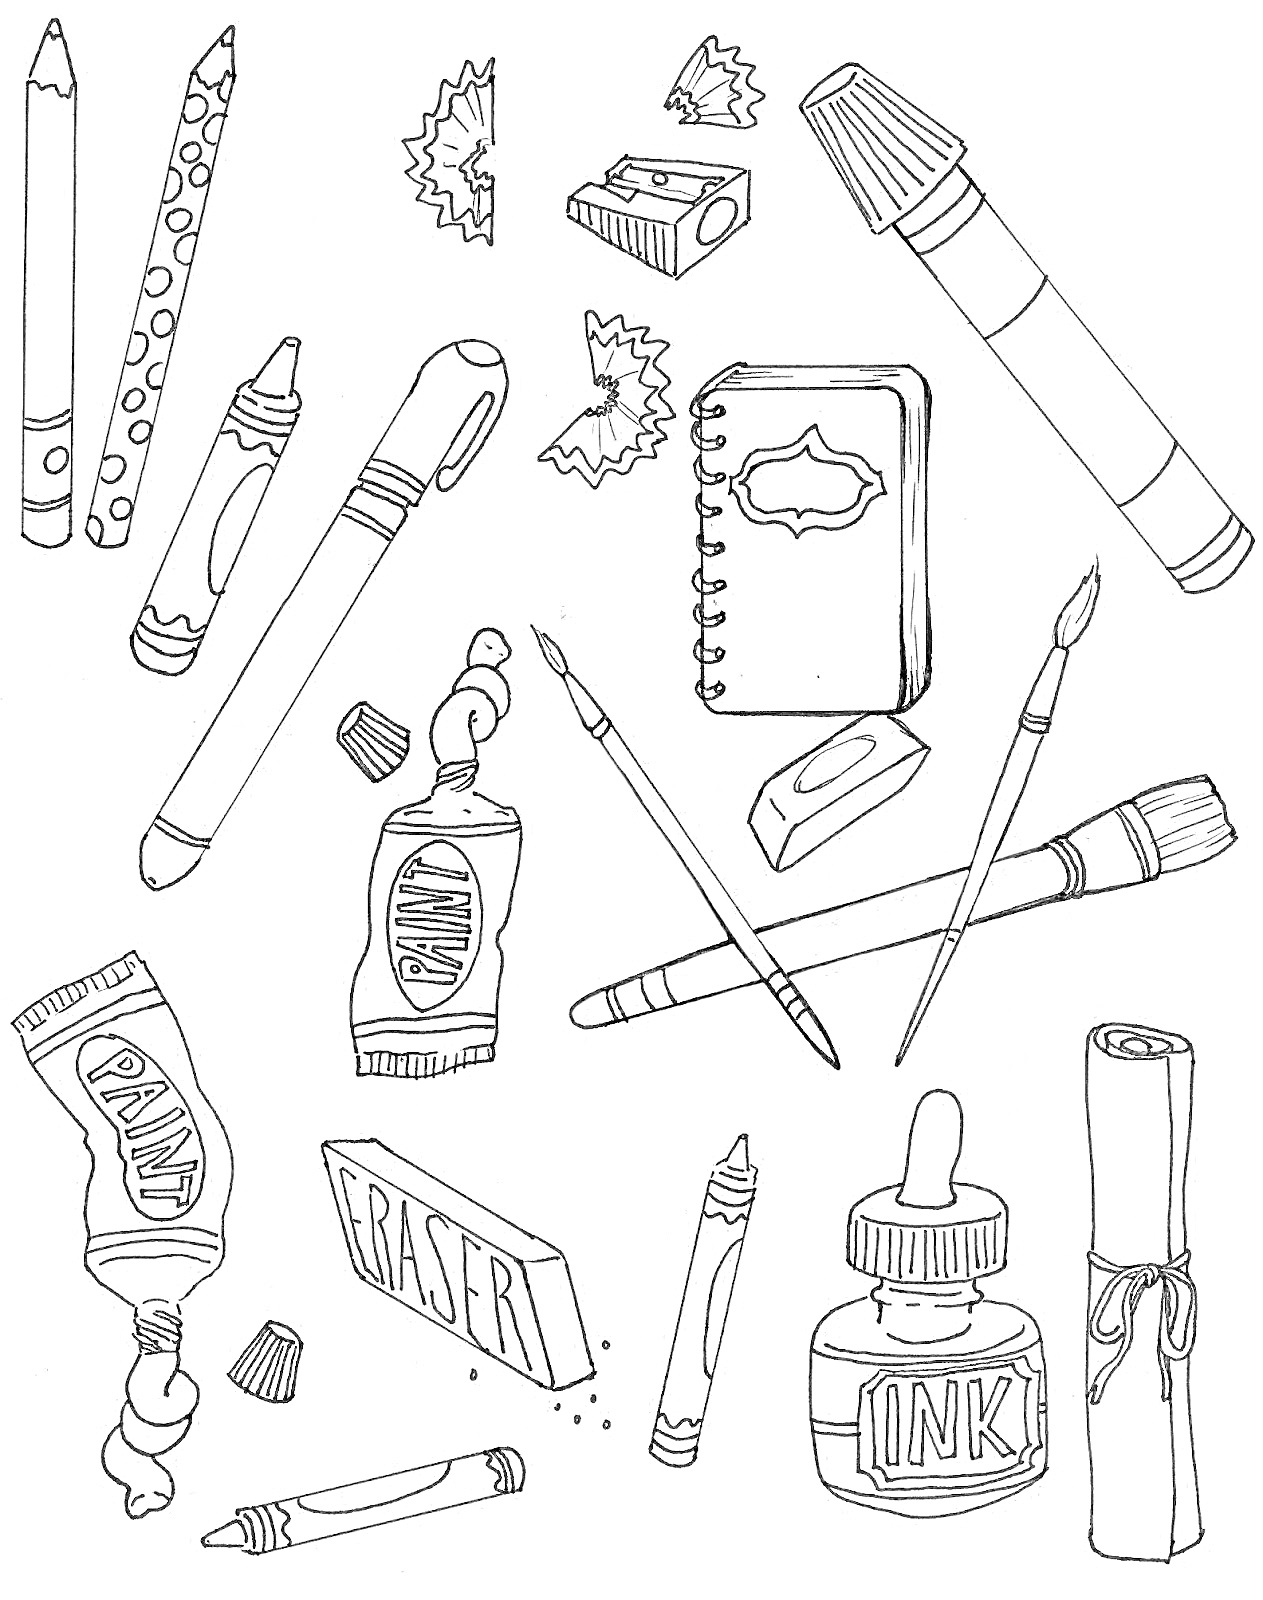 Раскраска Канцелярские принадлежности (карандаши, ручки, точилки, линейка, краска, тюбик с краской, кисти, блокнот, стерка, чернильница, свиток)